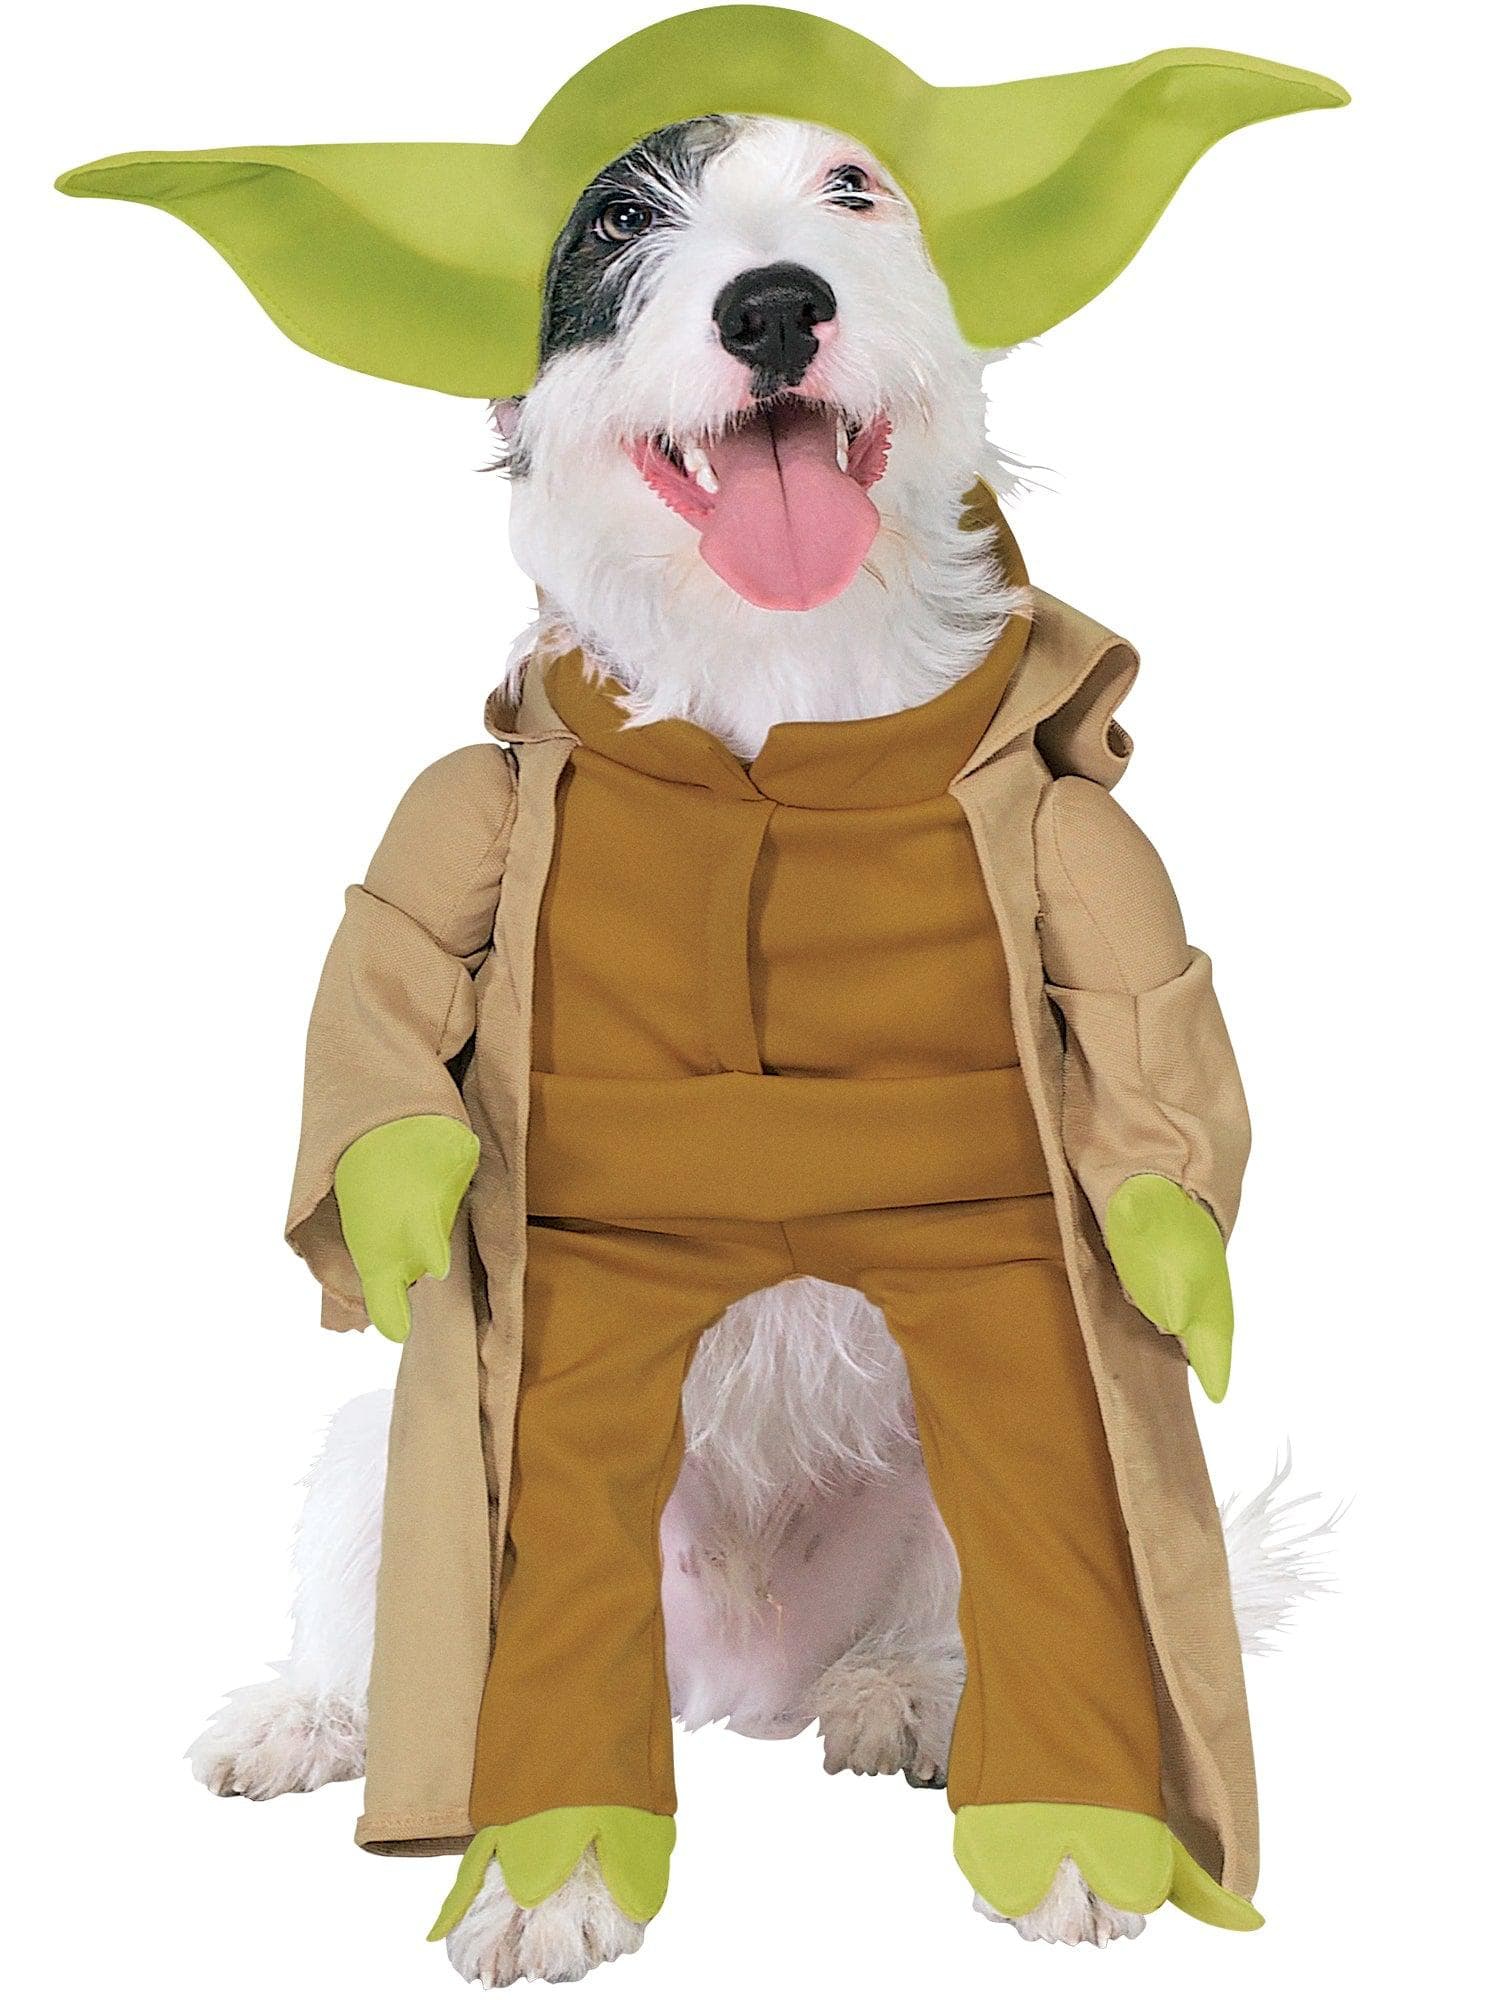 Star Wars Yoda Pet Costume - costumes.com